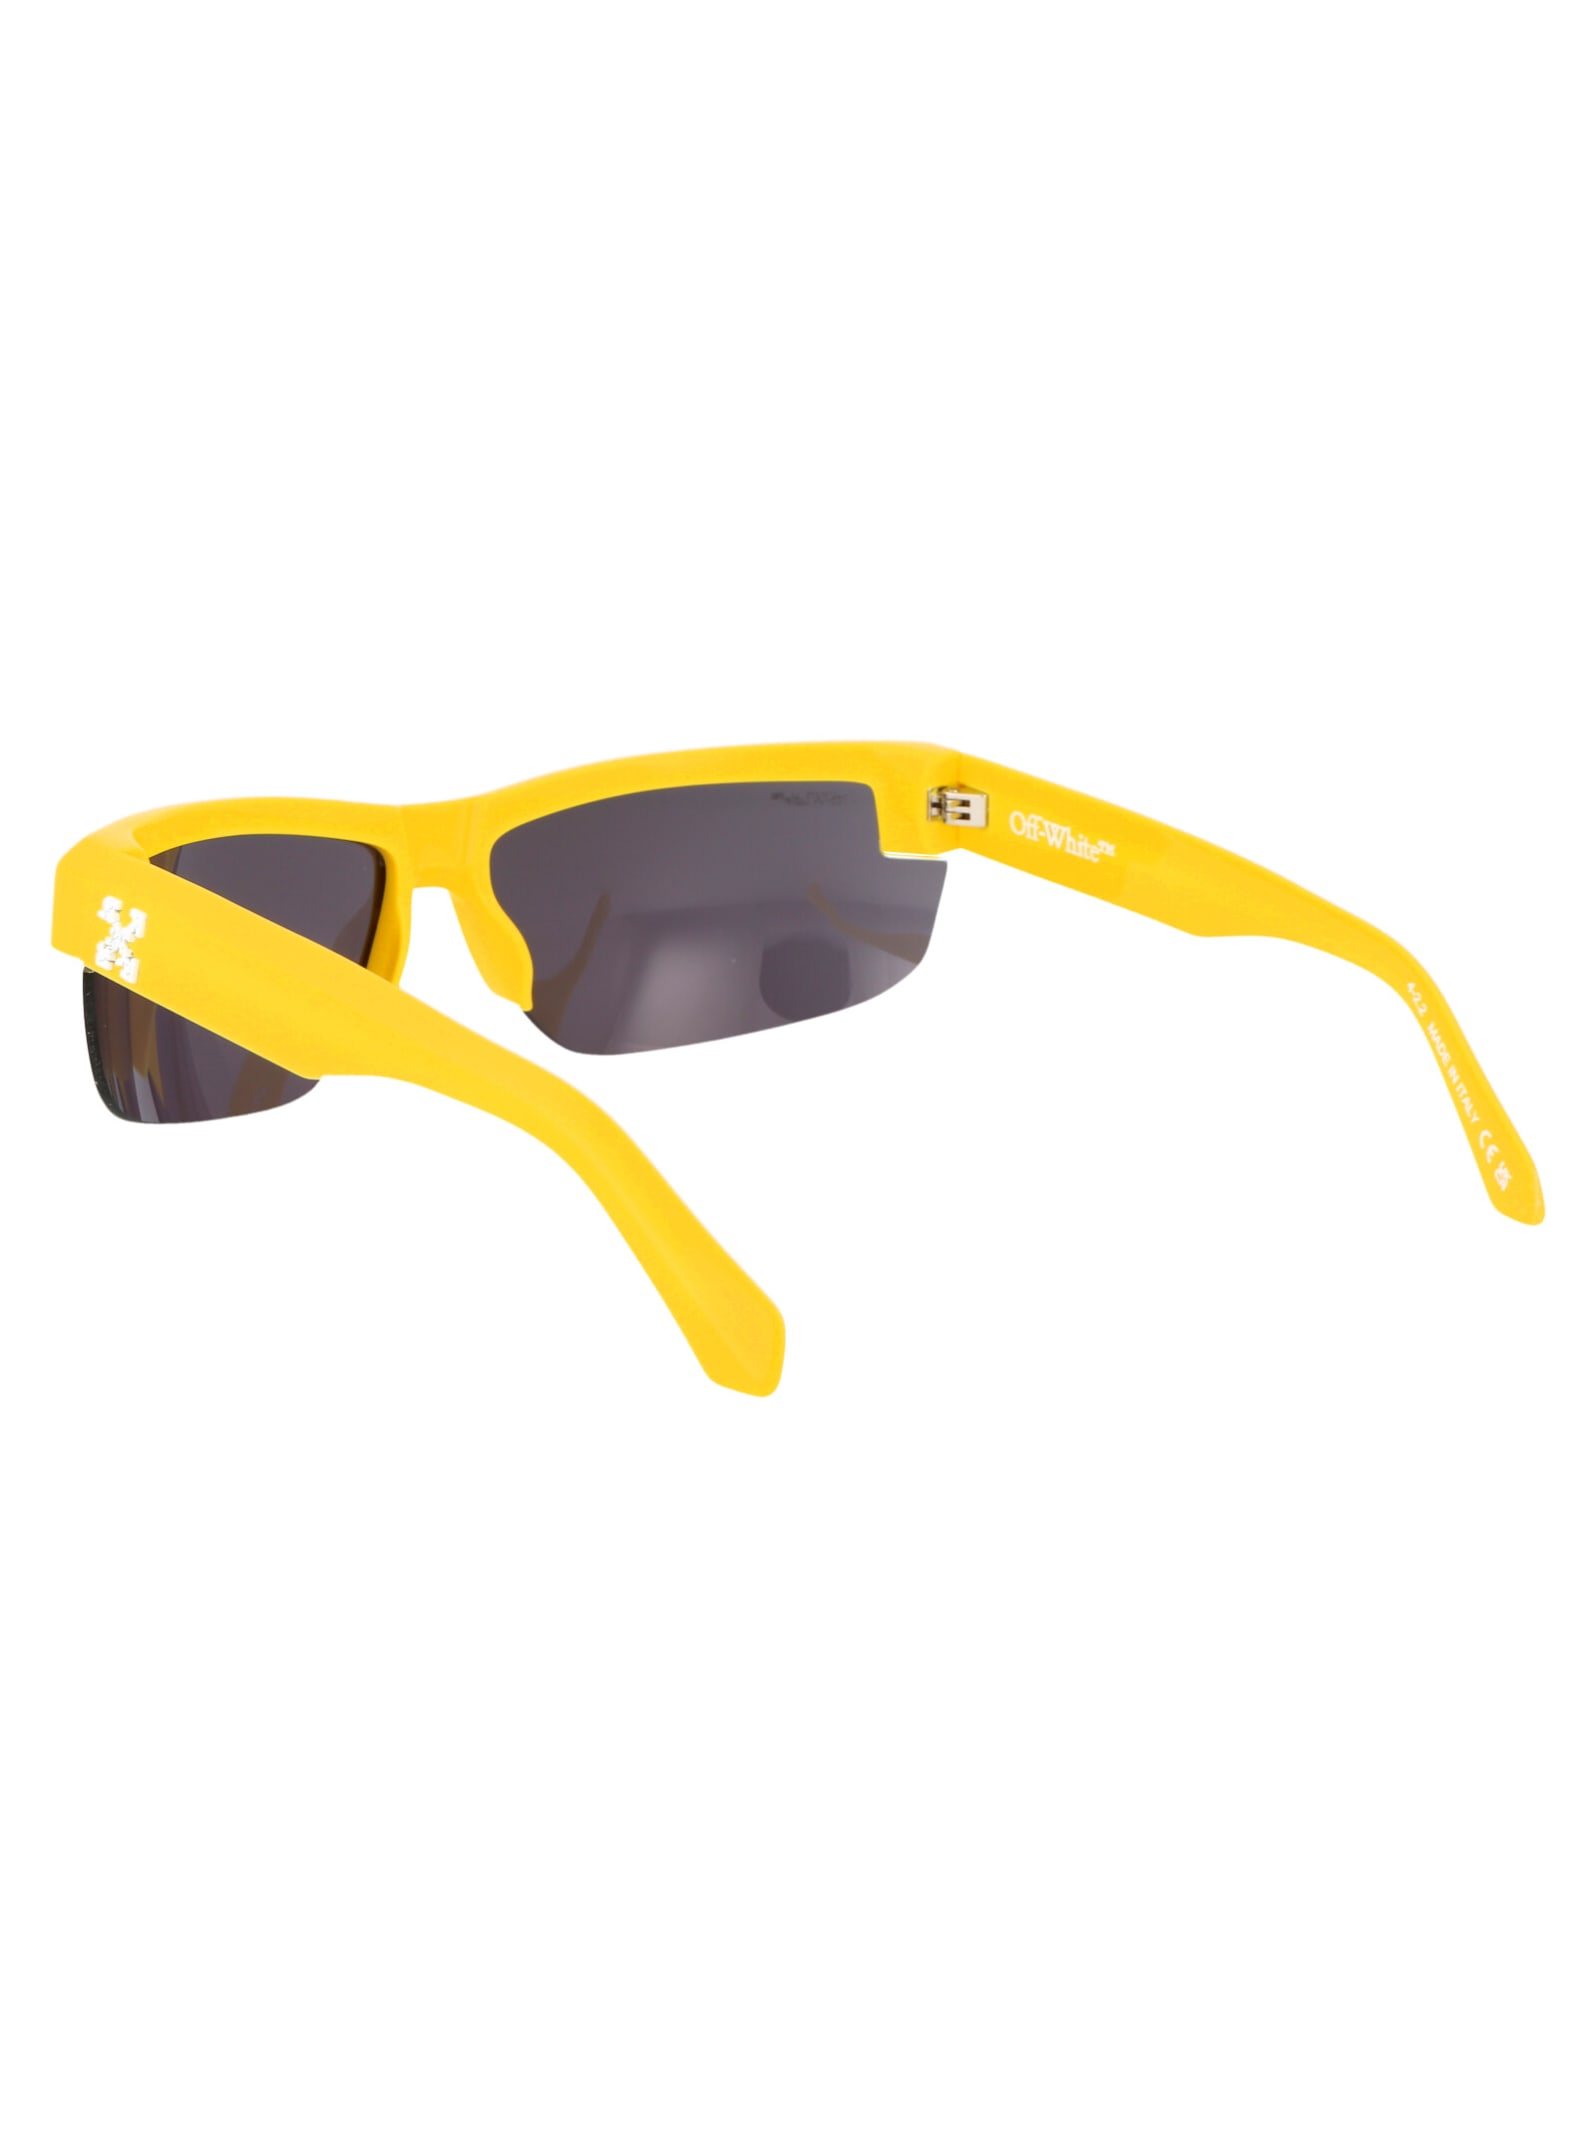 Toledo arrows-motif sunglasses